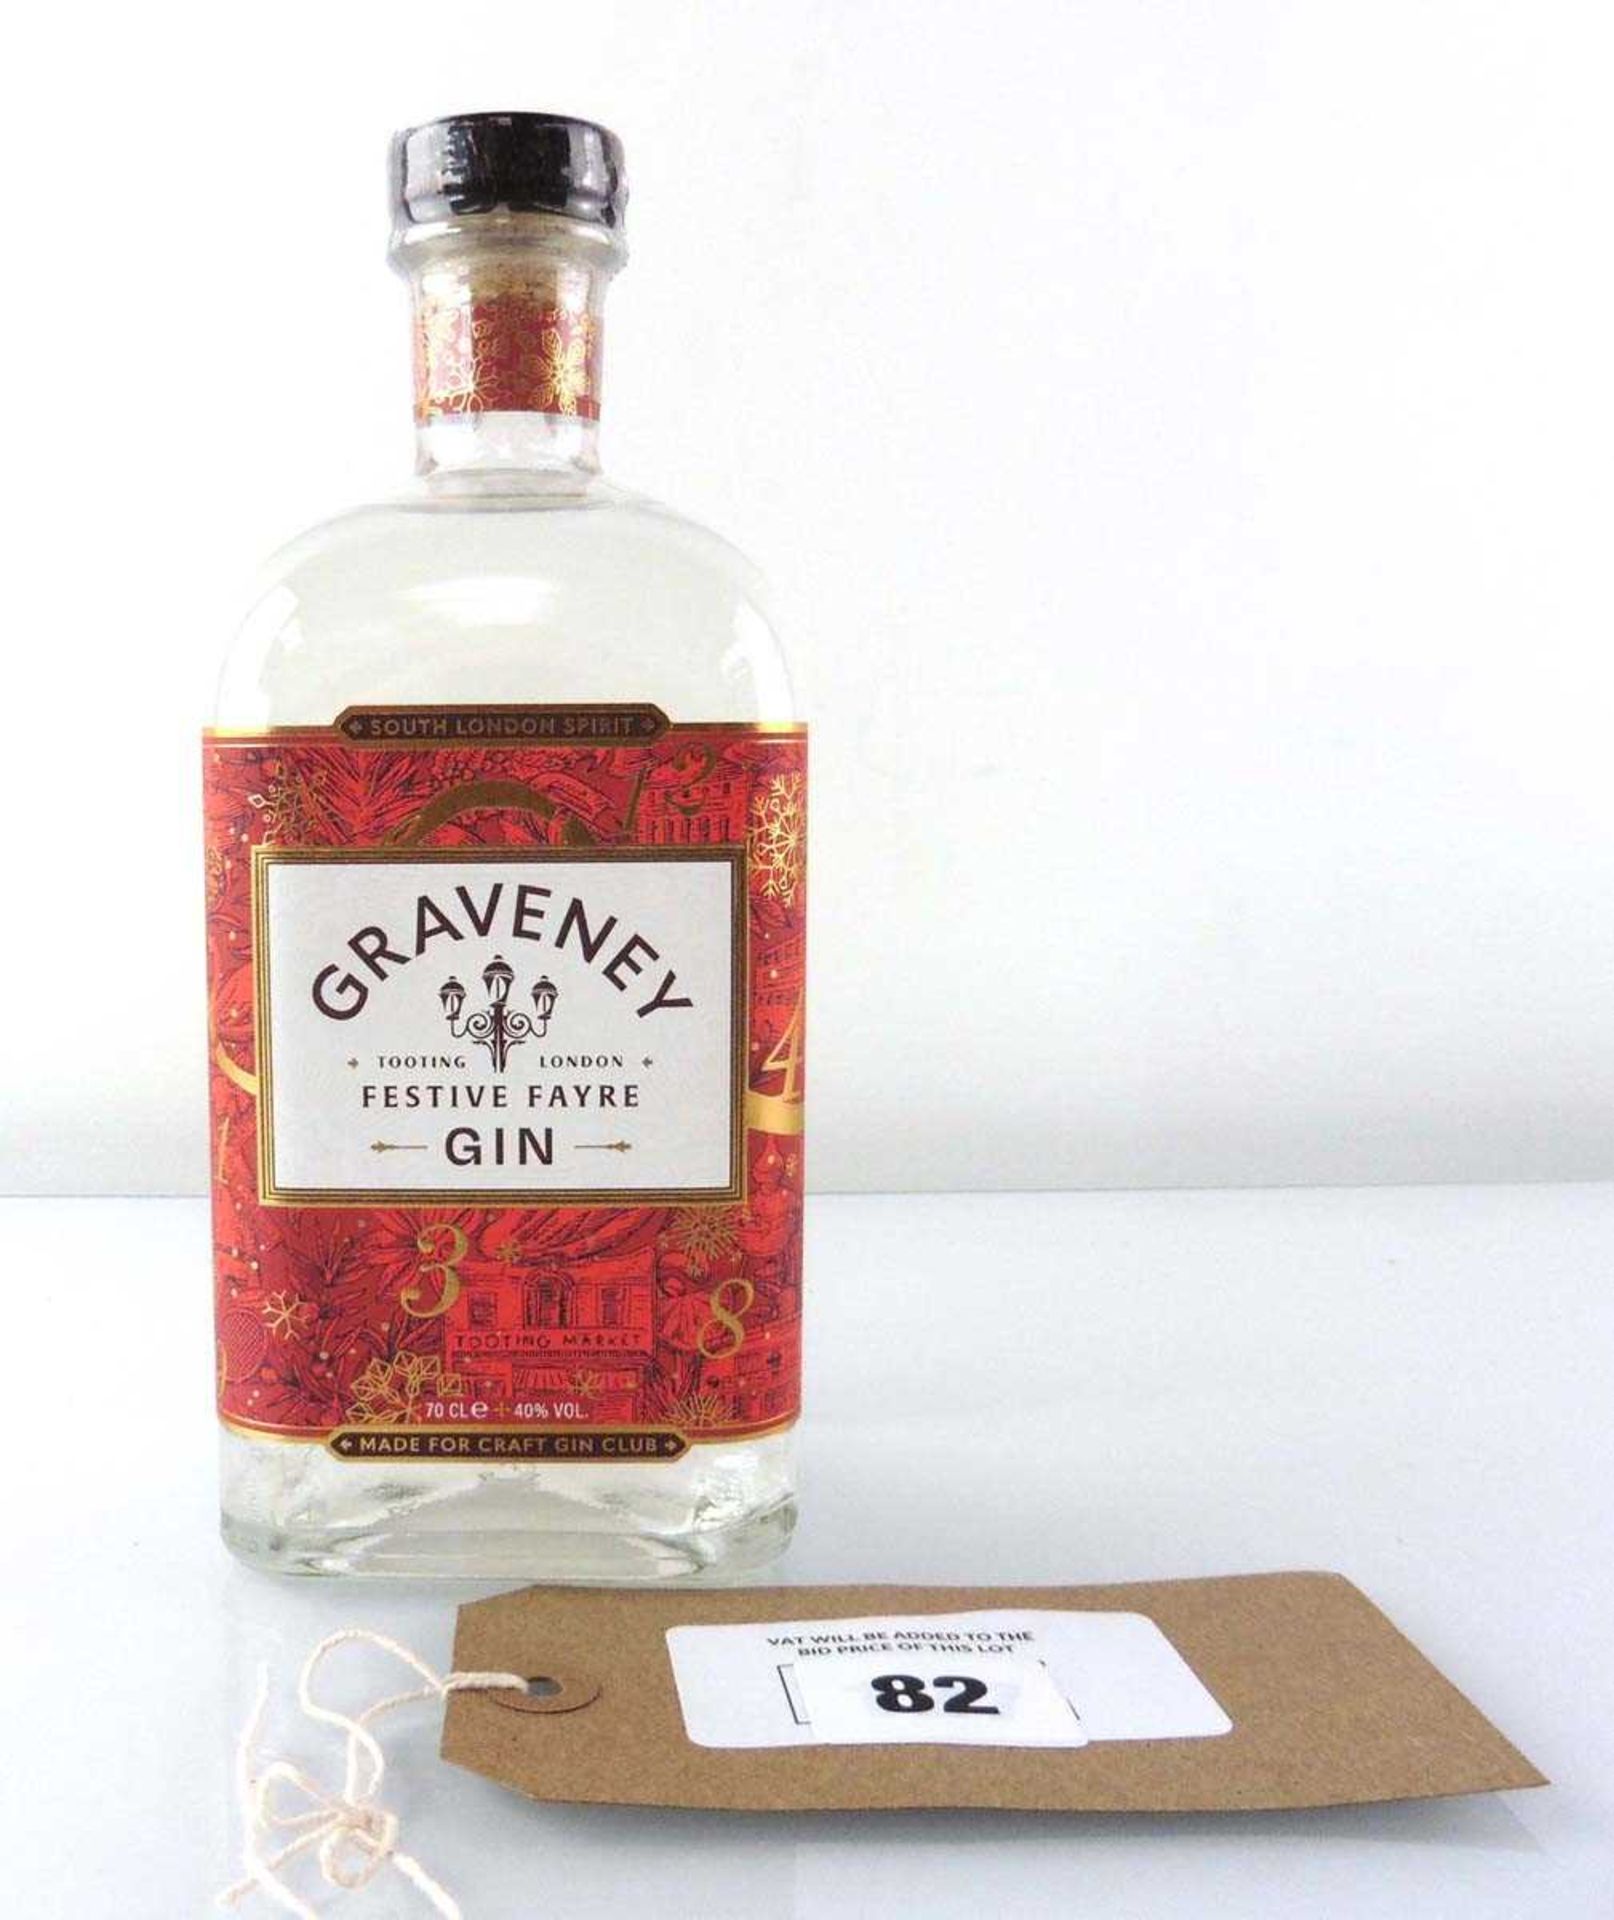 +VAT 4 bottles of Graveney Tooting London Festive Fayre Gin 70cl 40% (Note VAT added to bid price) - Image 2 of 2